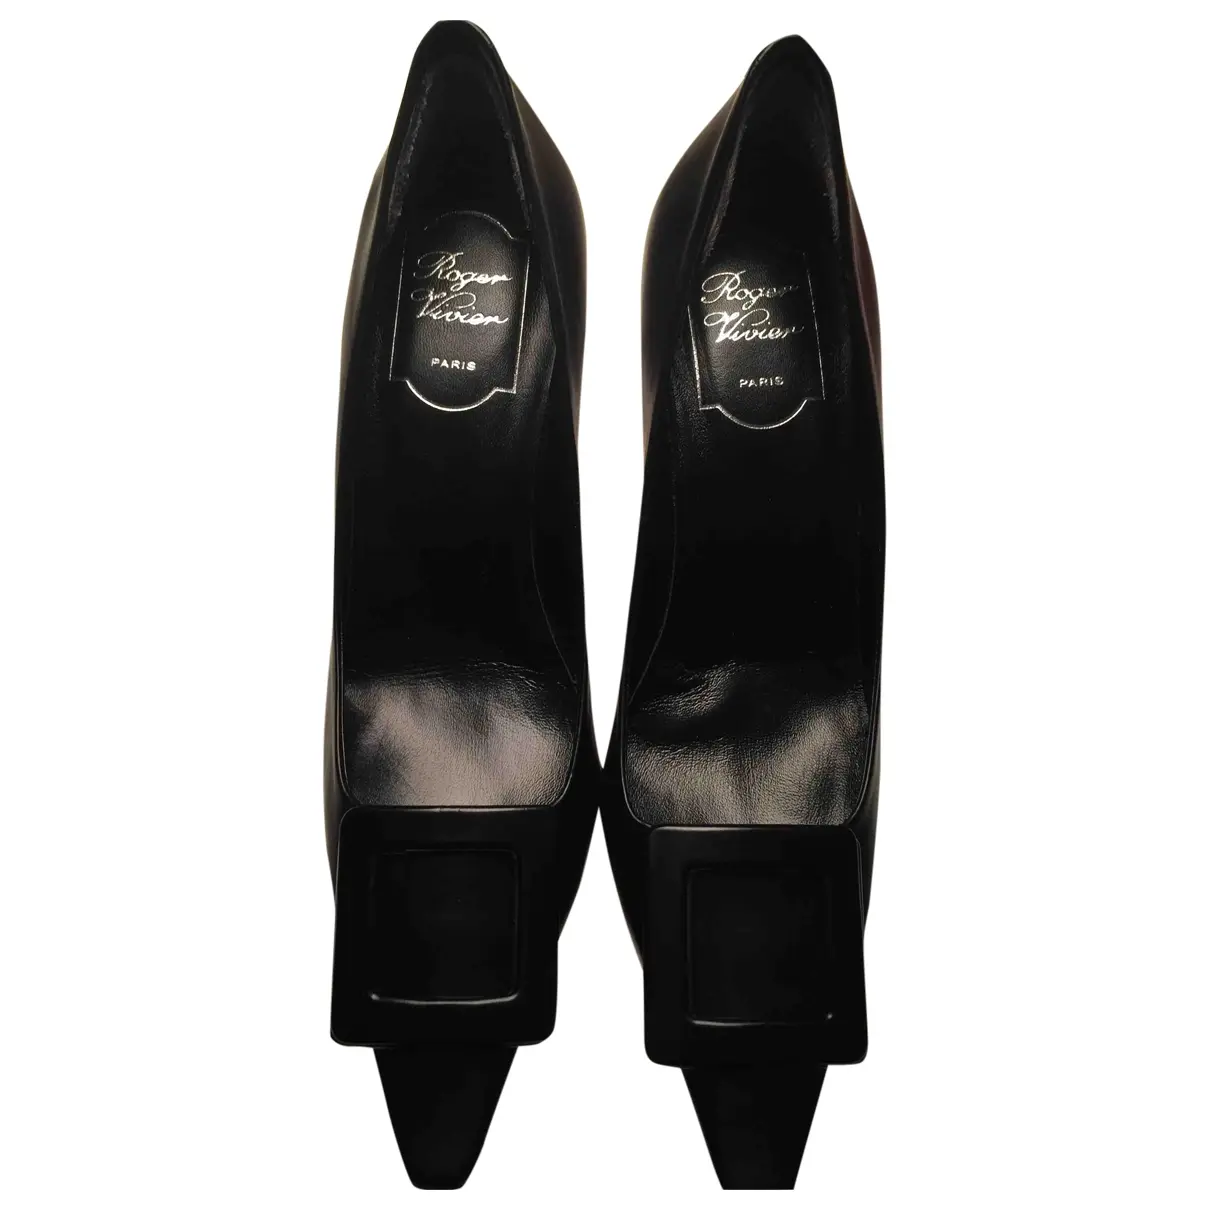 Très Vivier leather heels Roger Vivier